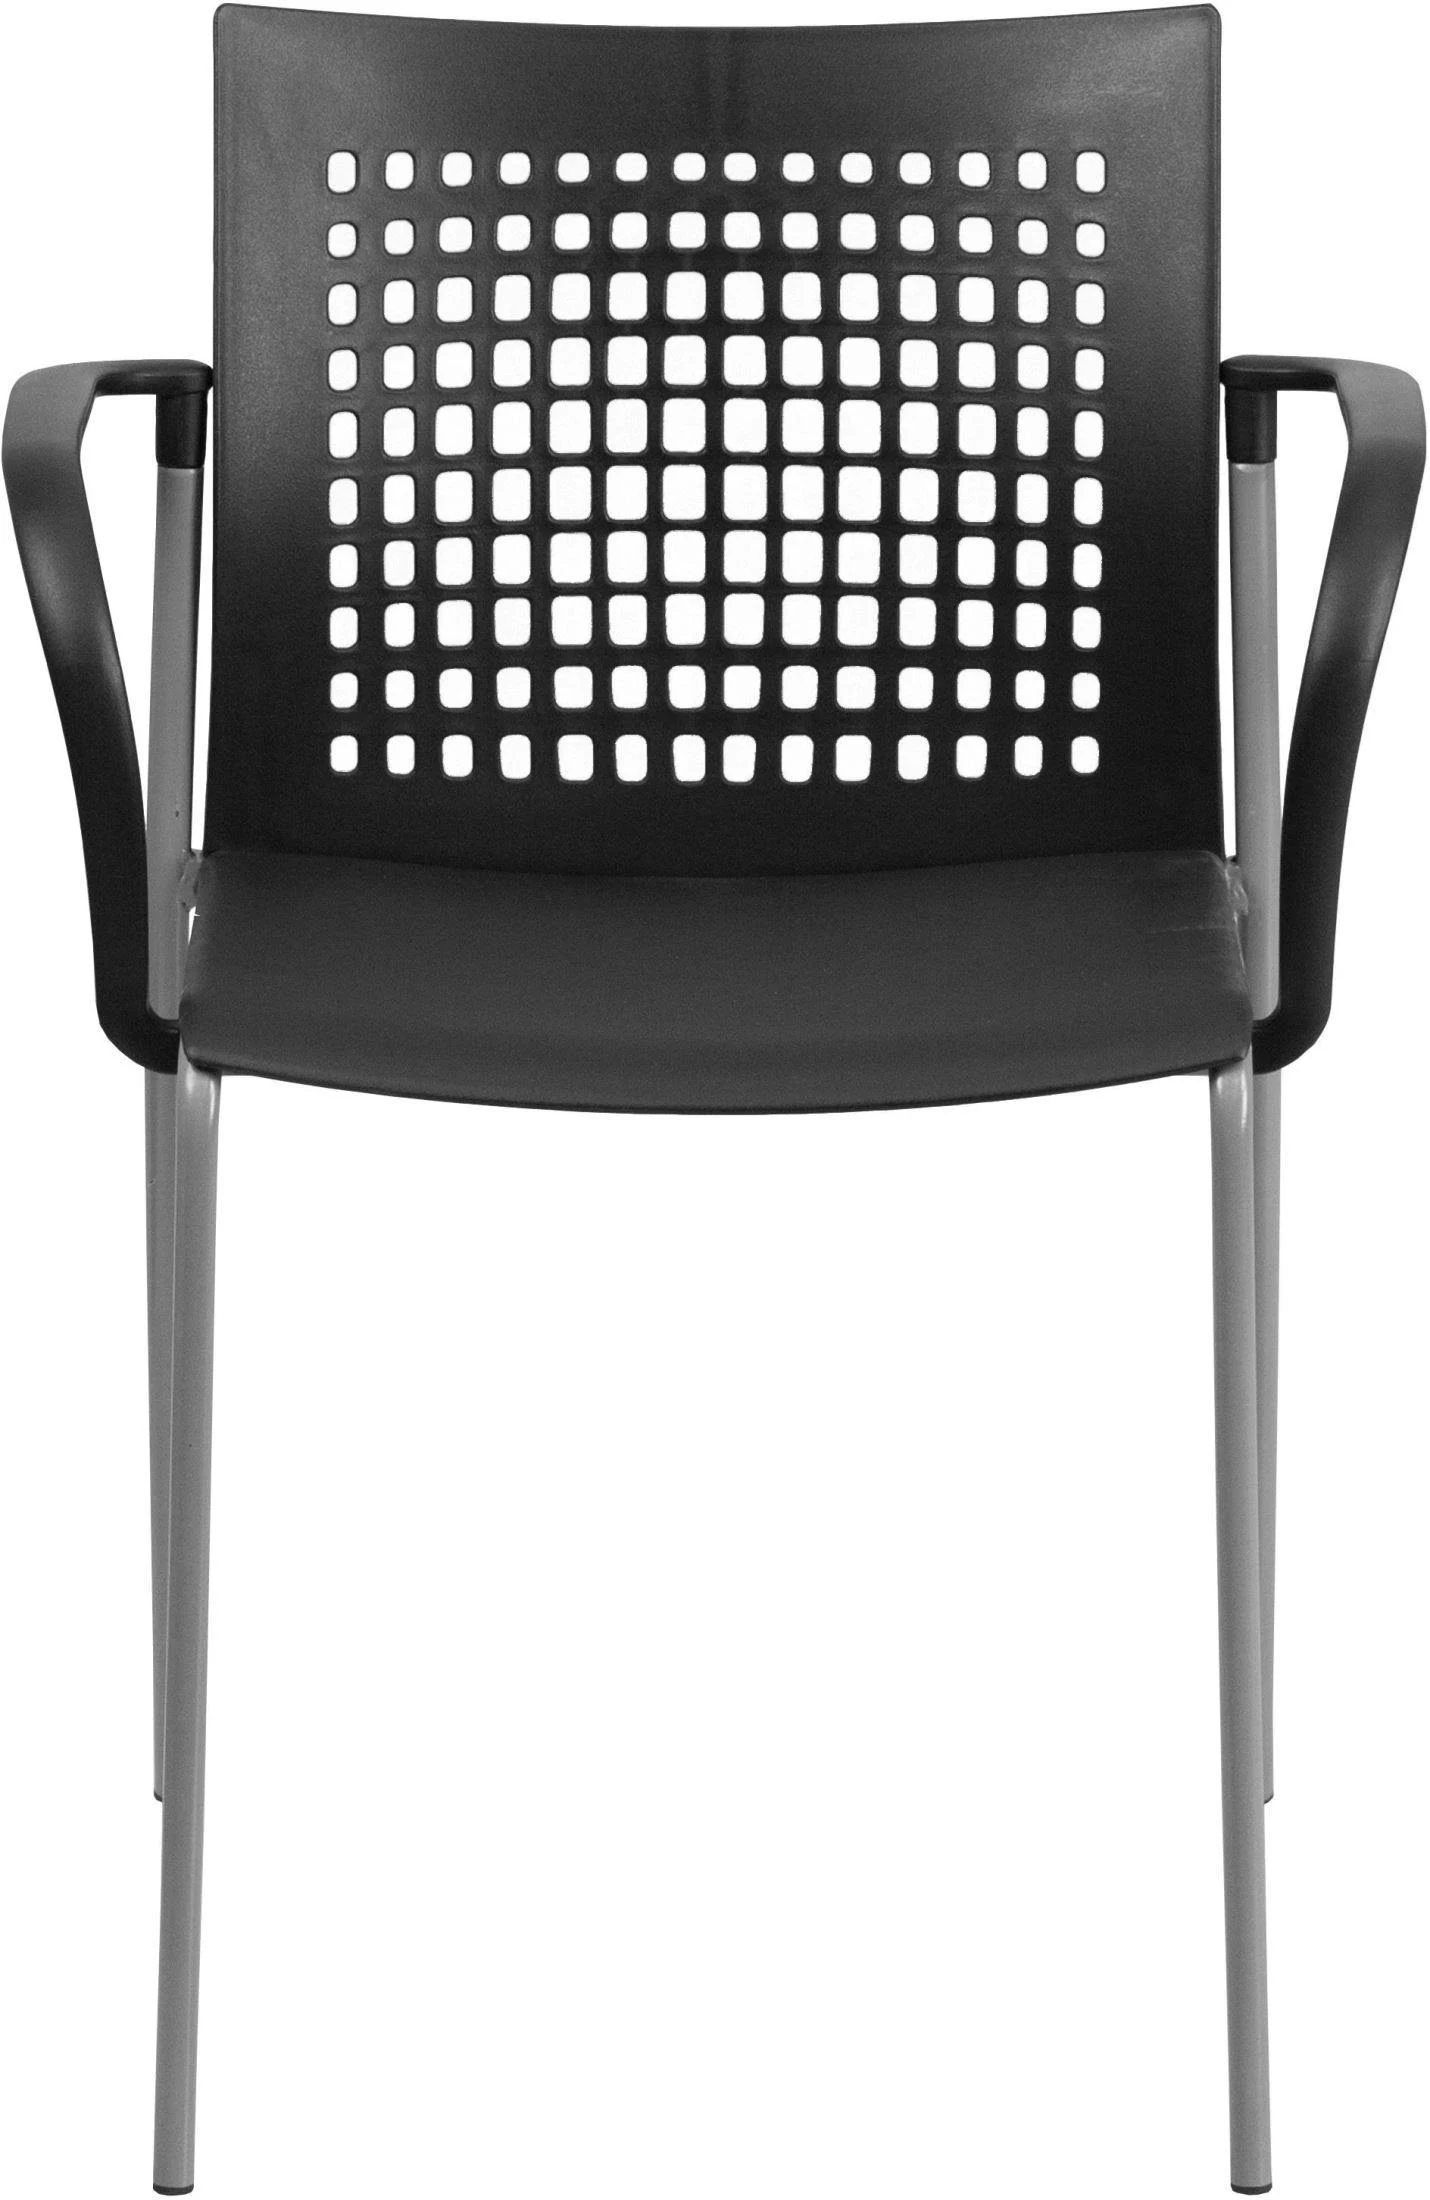 Flash Furniture Hercules Series 551 Lb Capacity White Stack Chair 